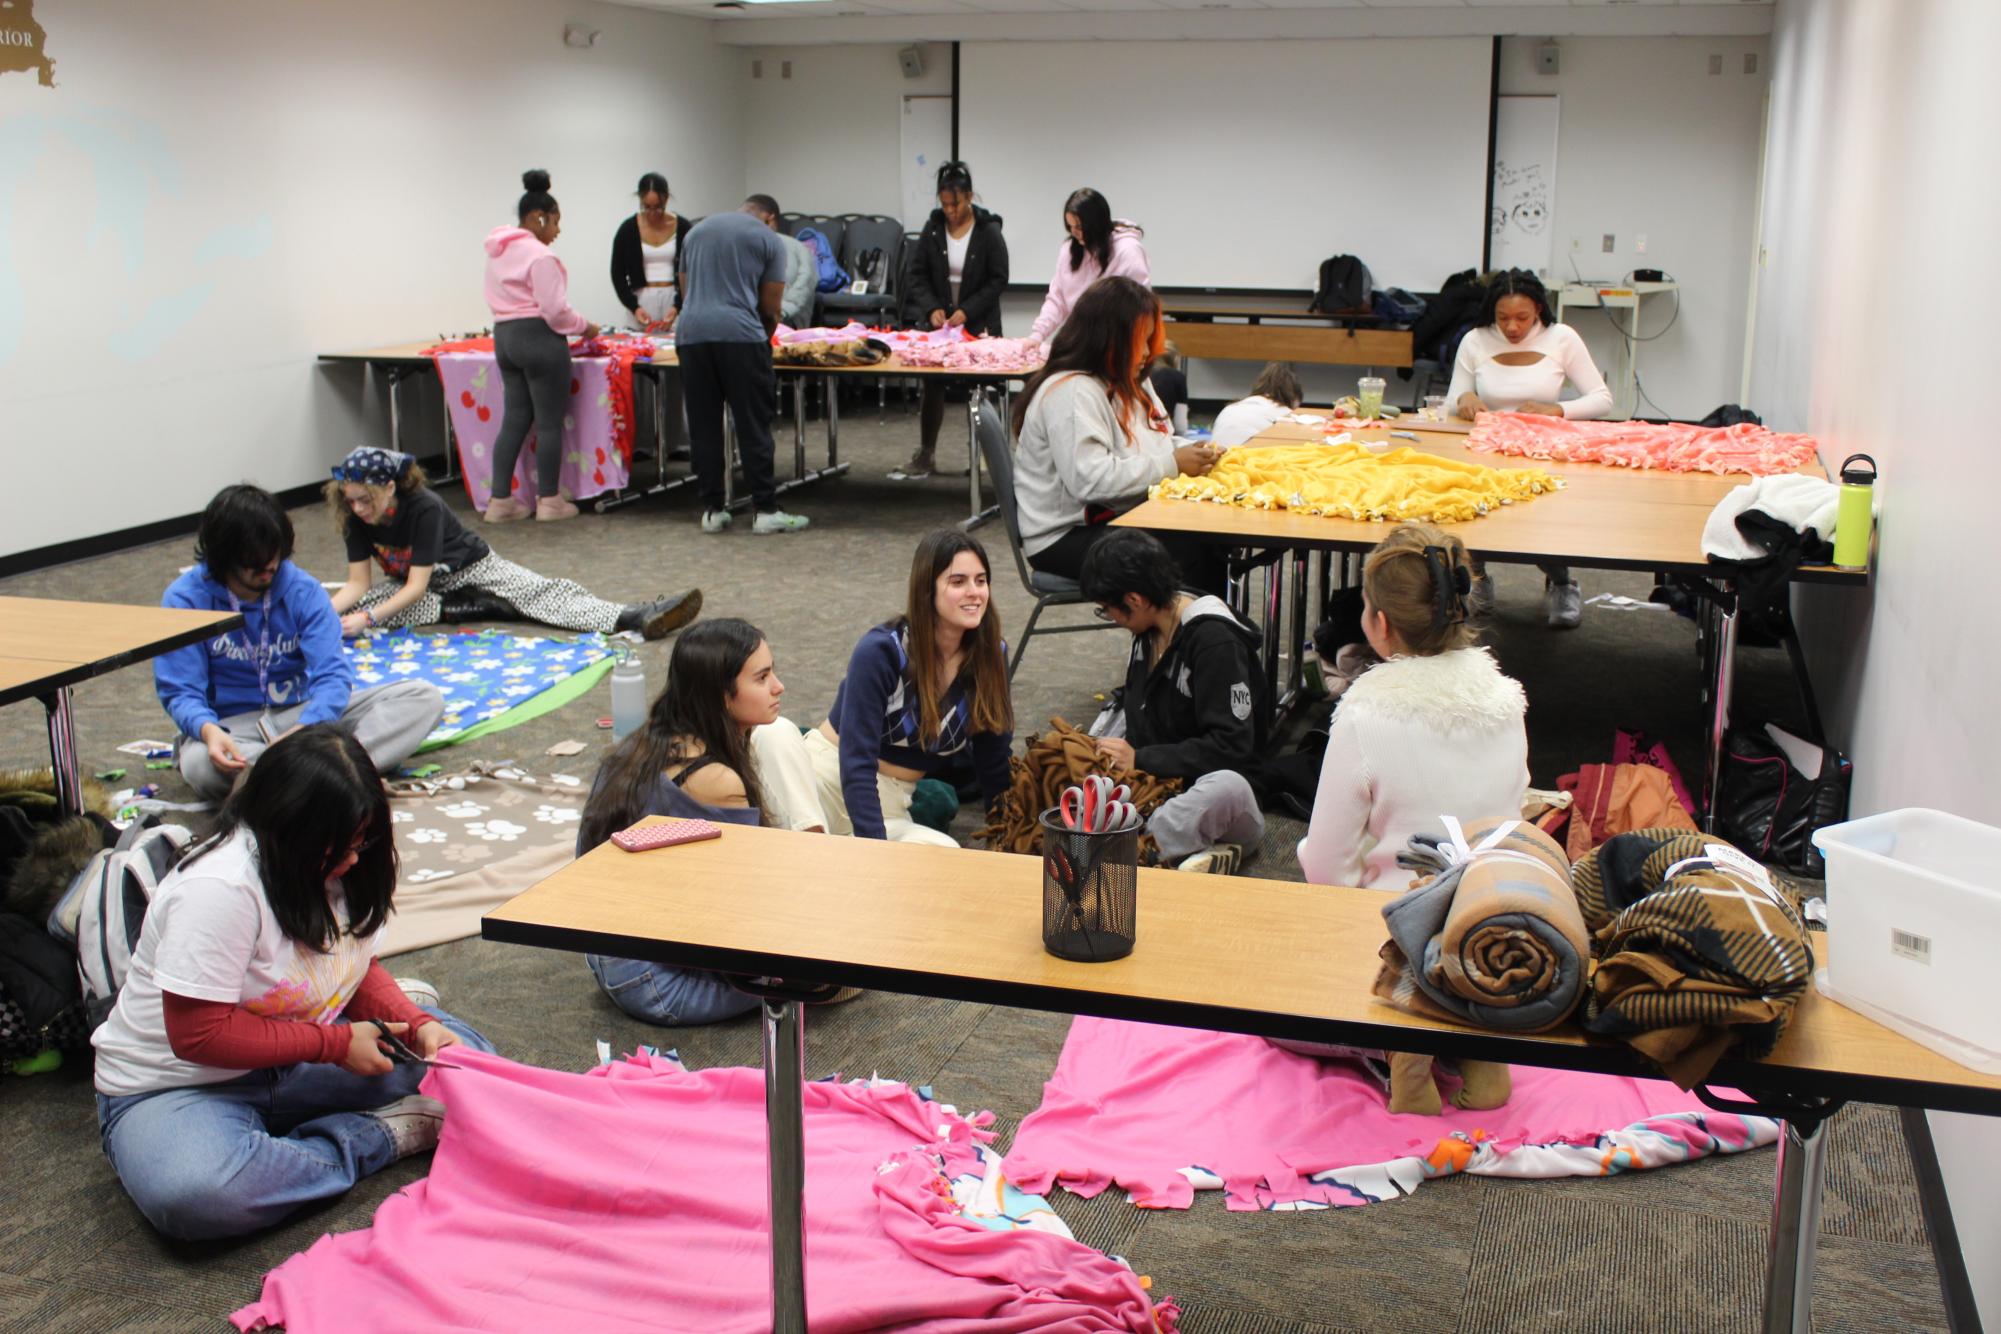 SPB hosts successful blanket-making event